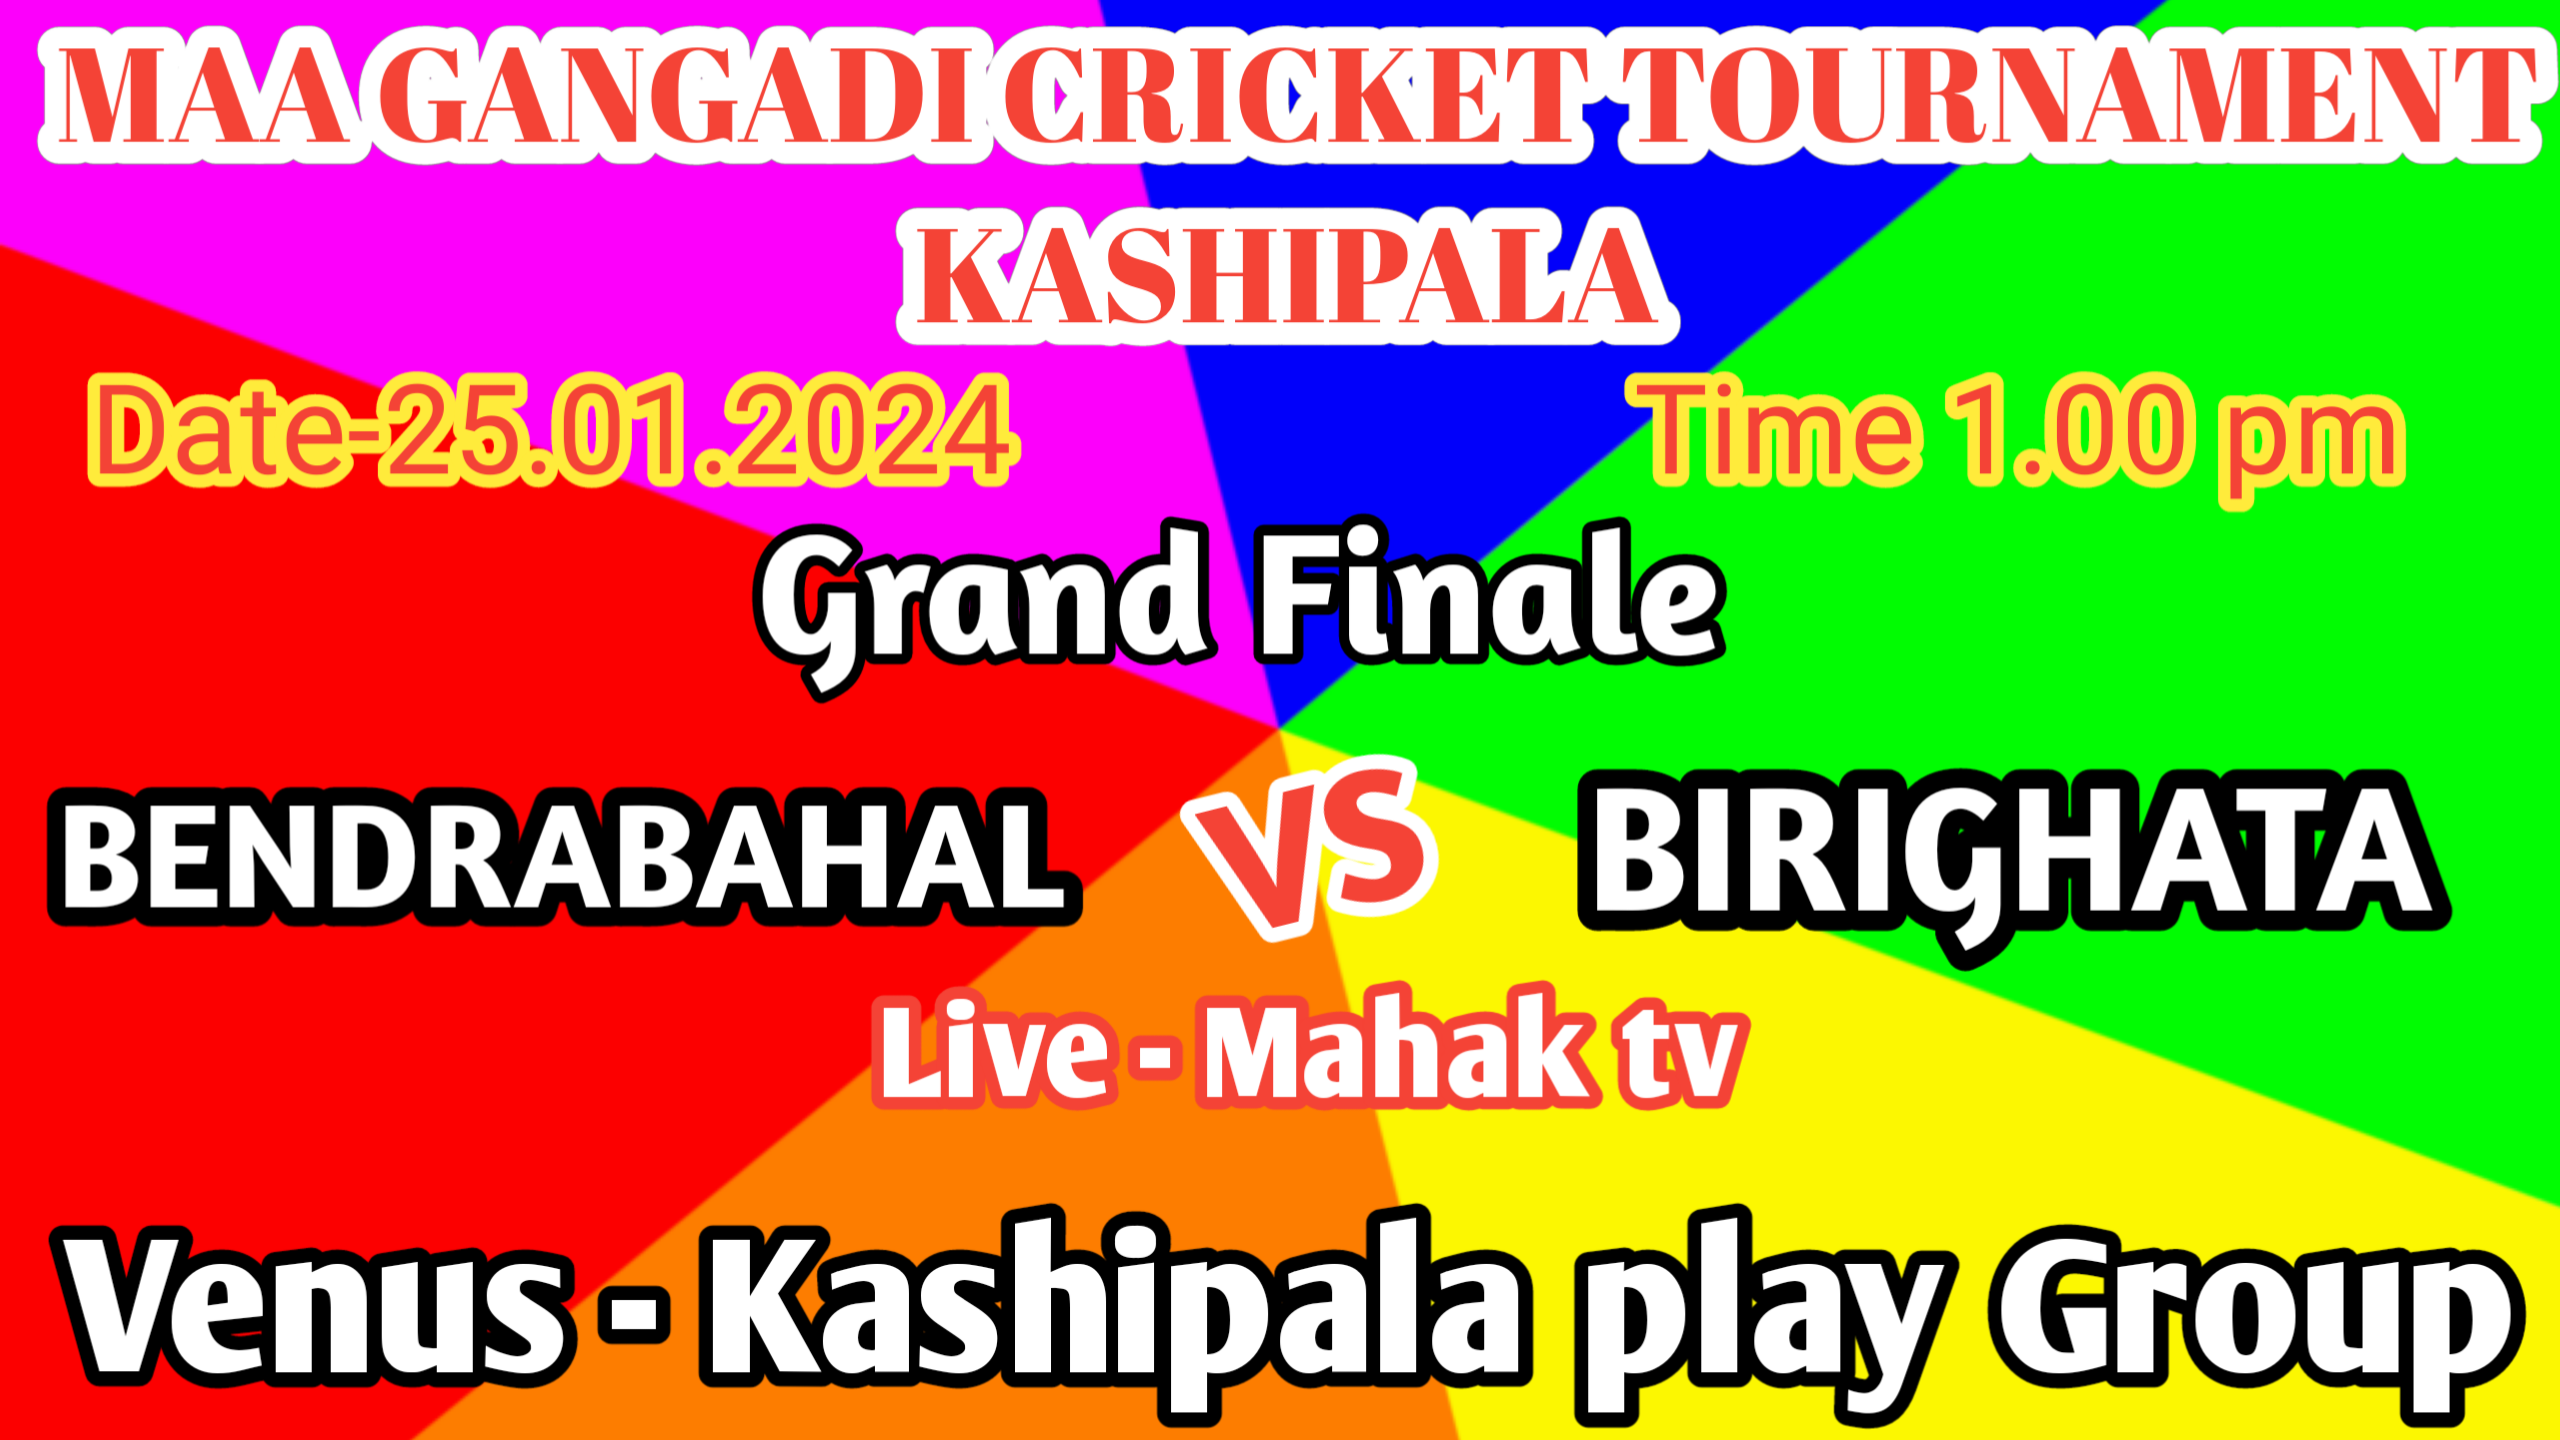 Maa Gangadi cricket tournament Kashipala